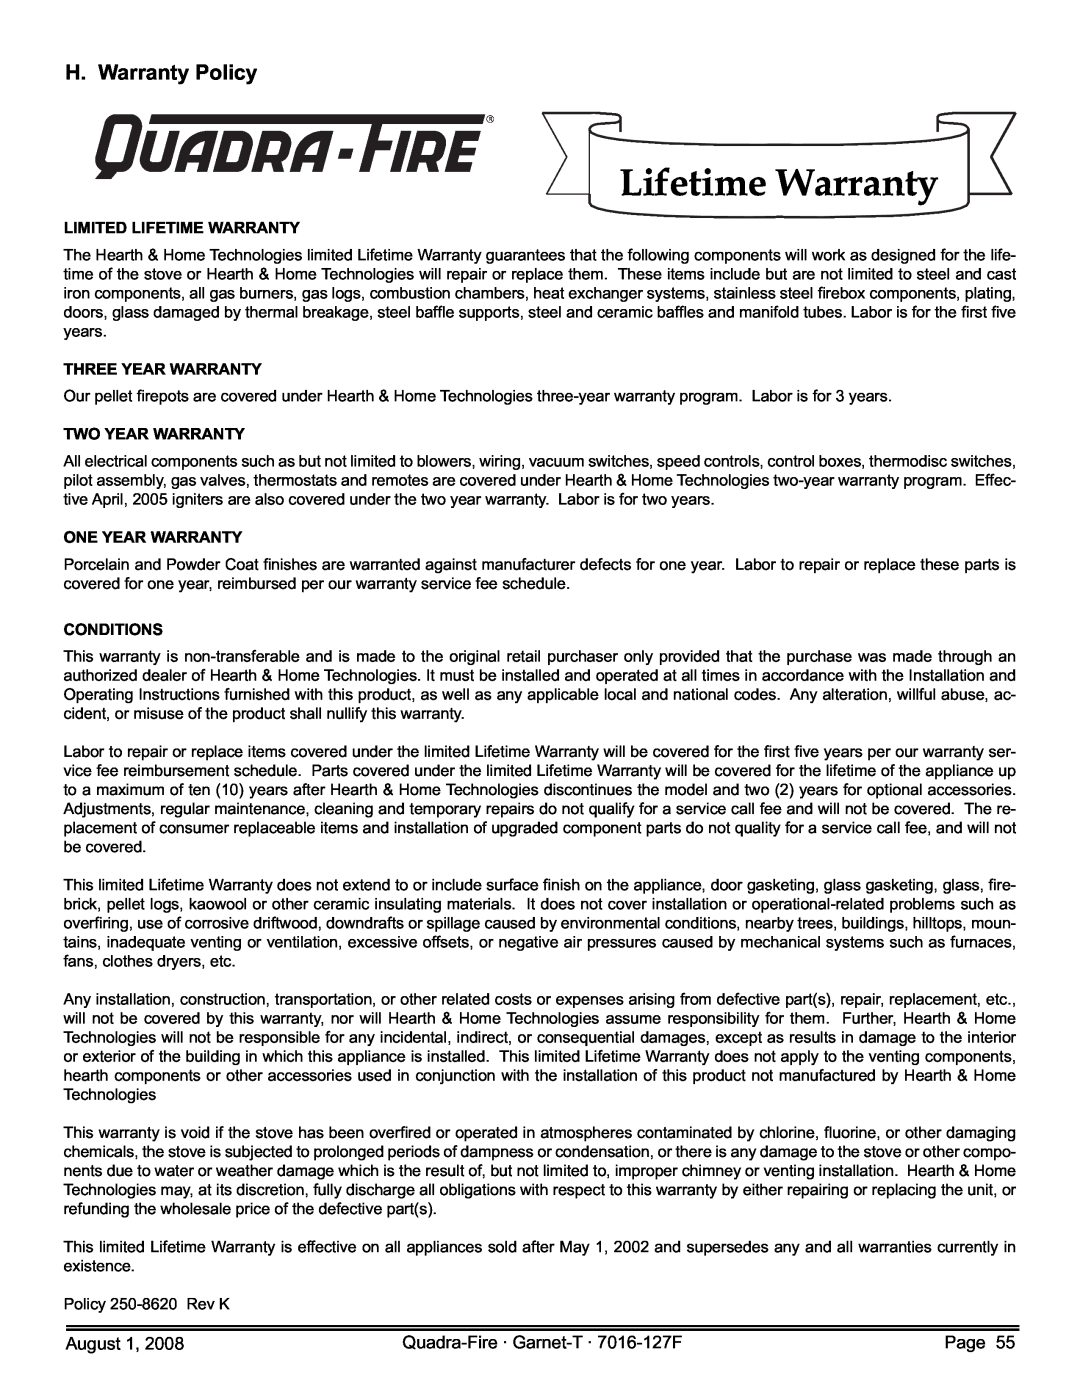 Quadra-Fire GARNET-MBK H. Warranty Policy, Limited Lifetime Warranty, Three Year Warranty, Two Year Warranty 